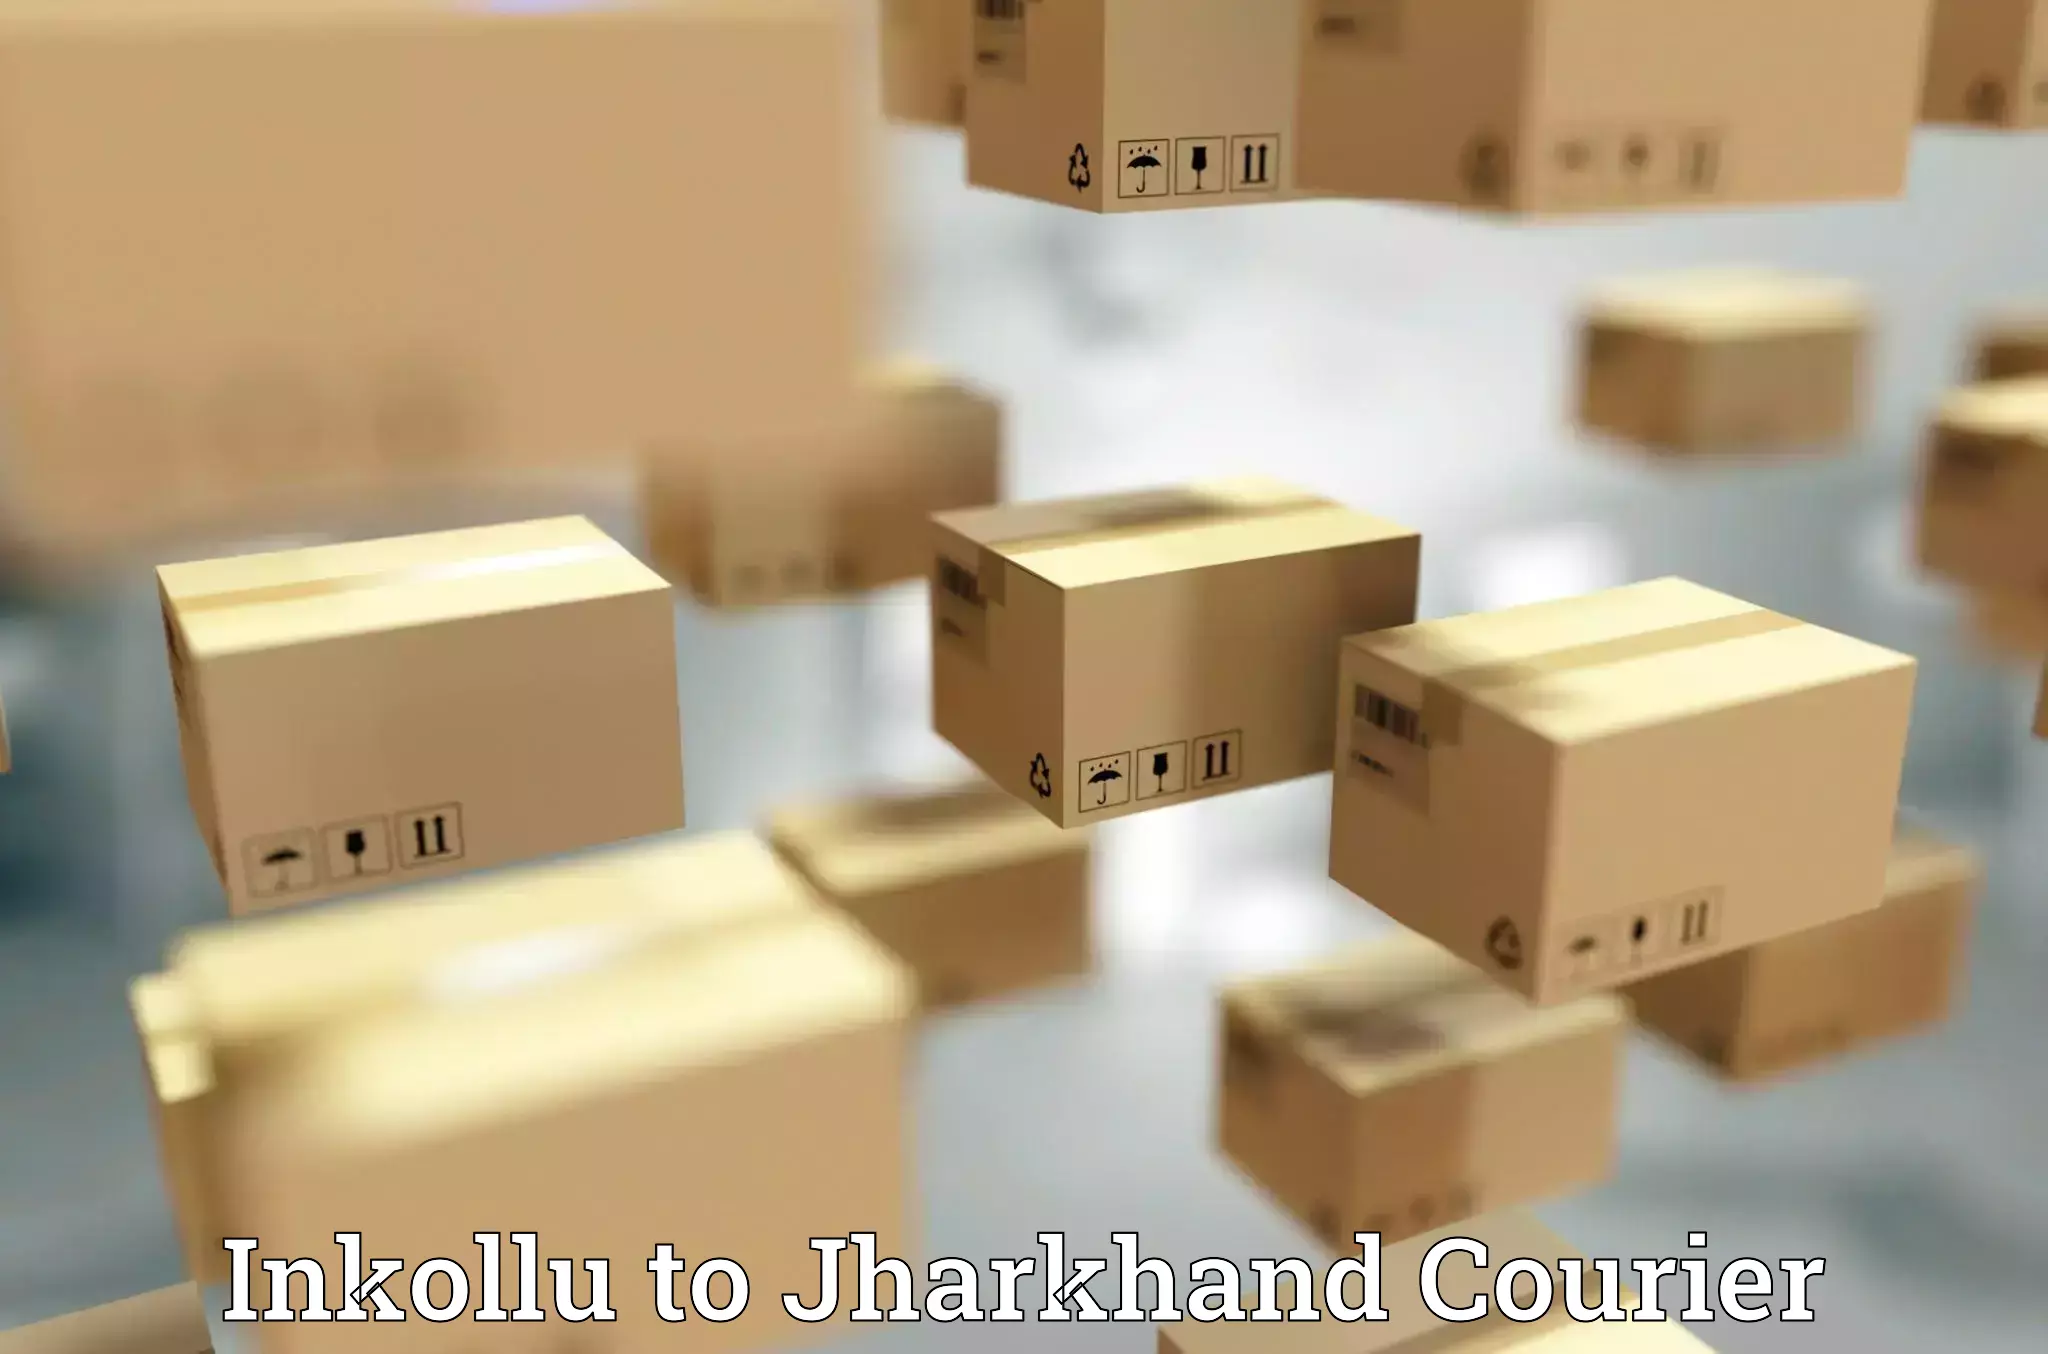 Logistics and distribution Inkollu to Jamshedpur